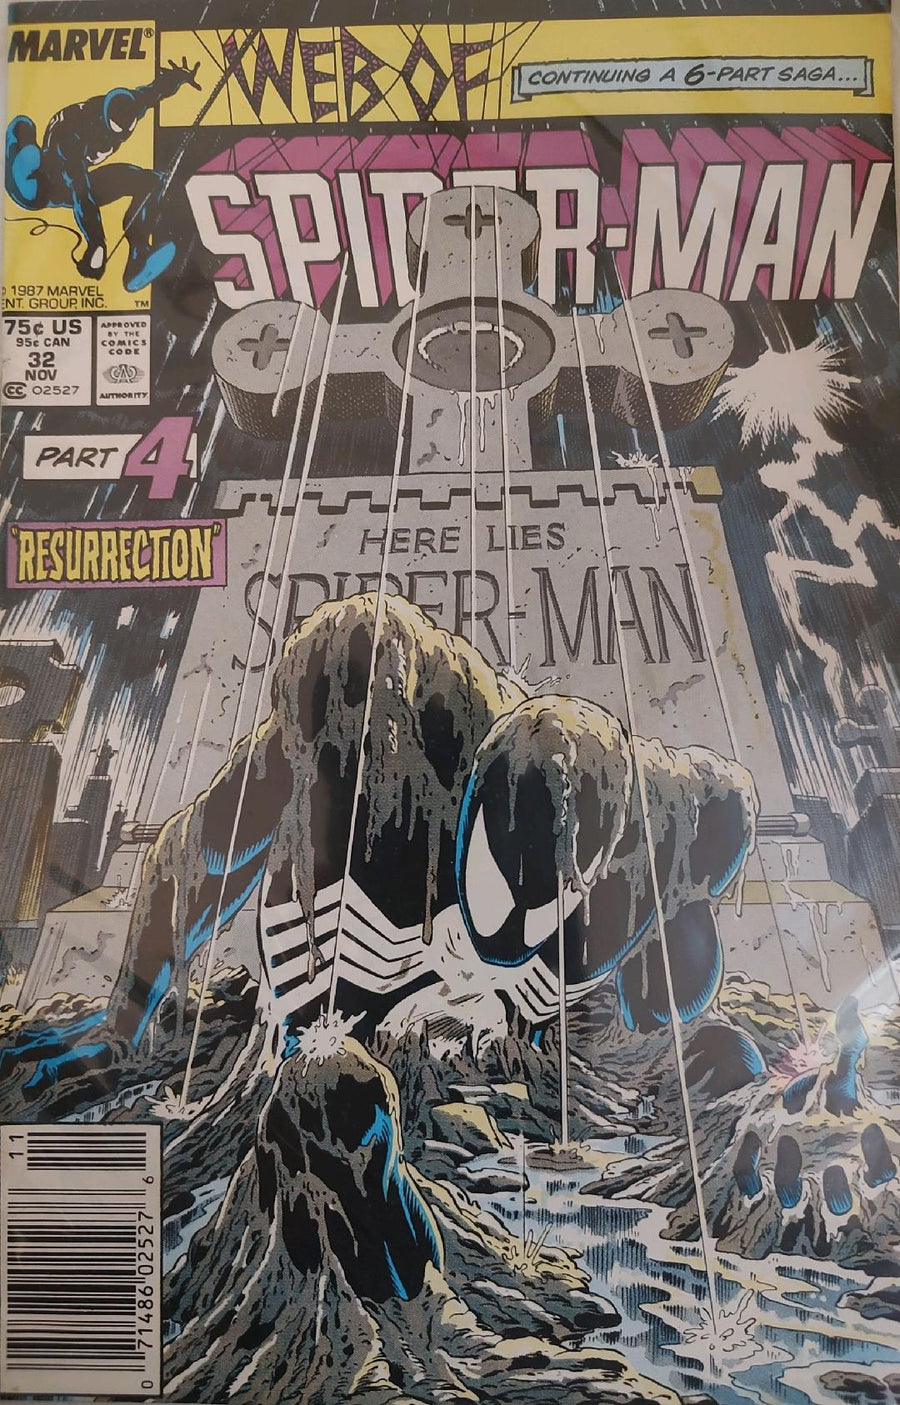 Web of Spiderman #32 Comic Book Cover